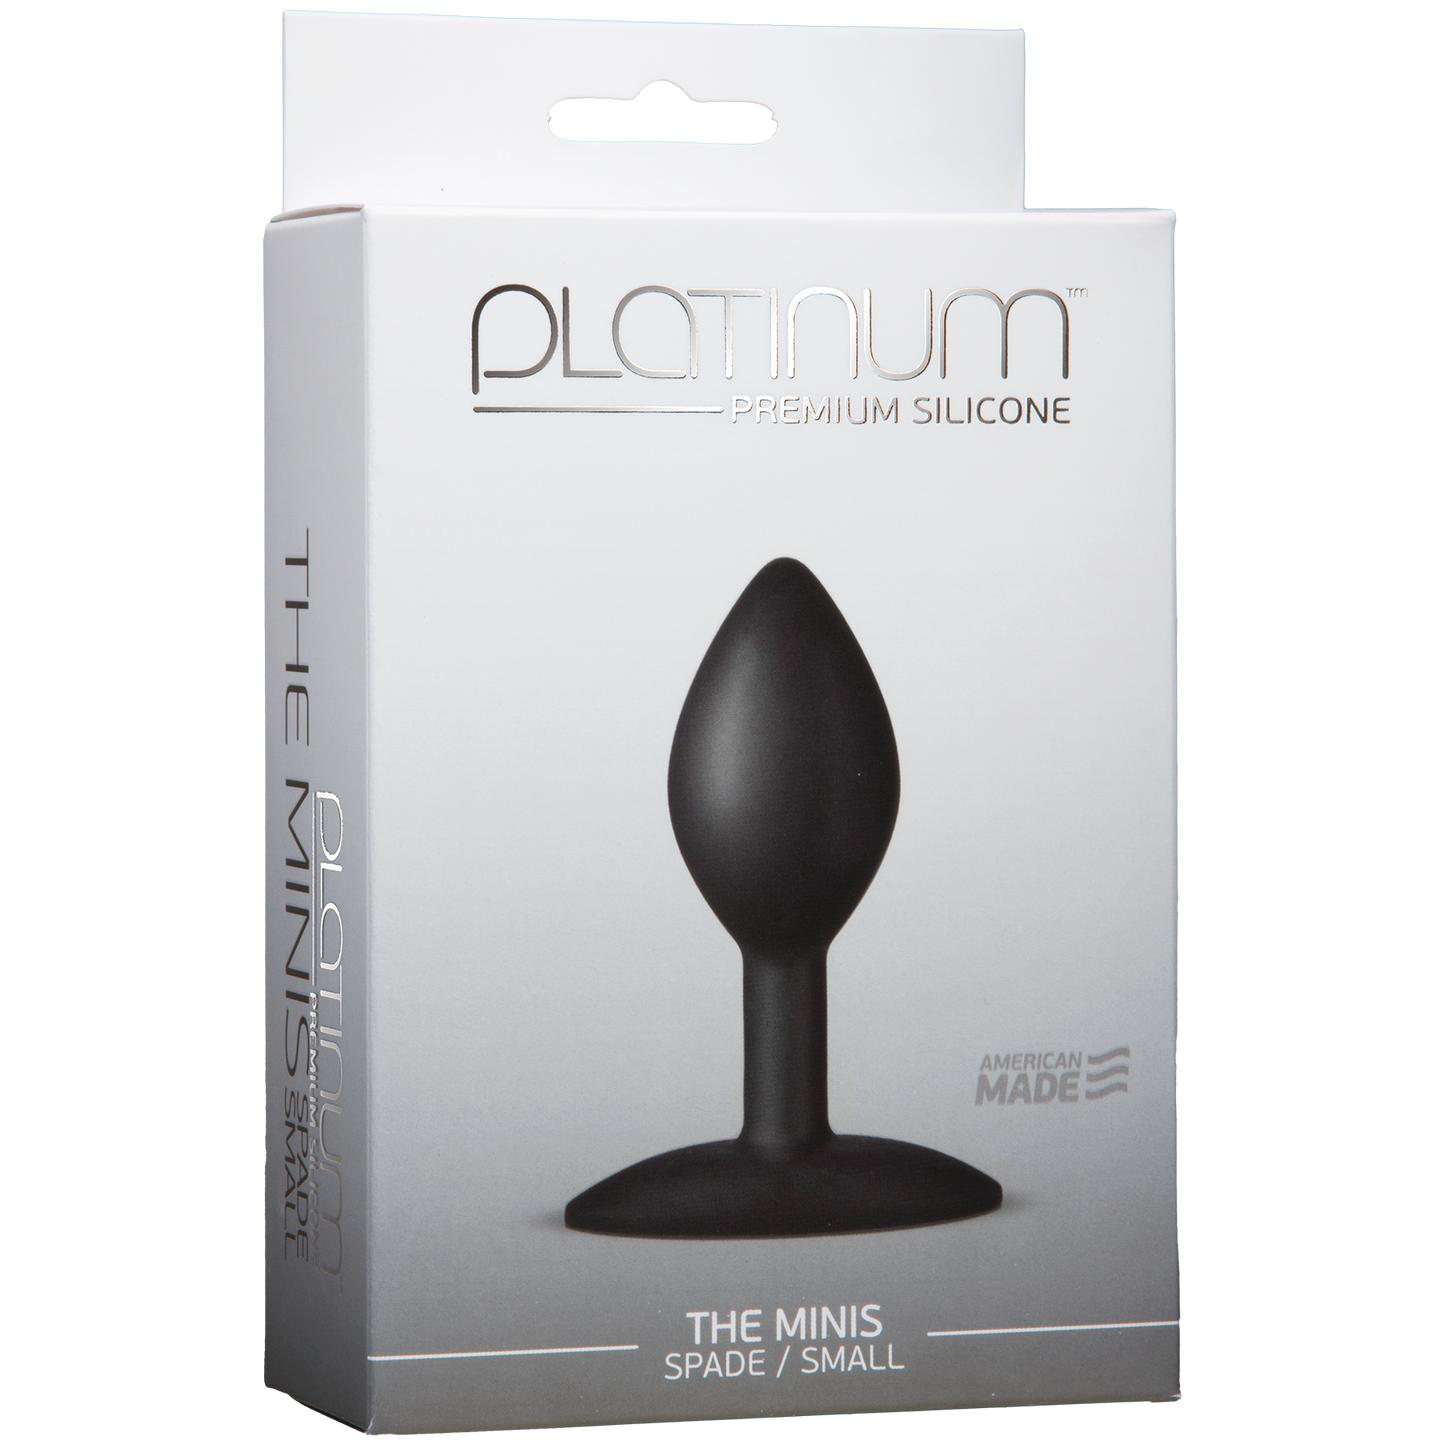 Platinum Premium Silicone The Mini's Spade - Small, Black - Thorn & Feather Sex Toy Canada